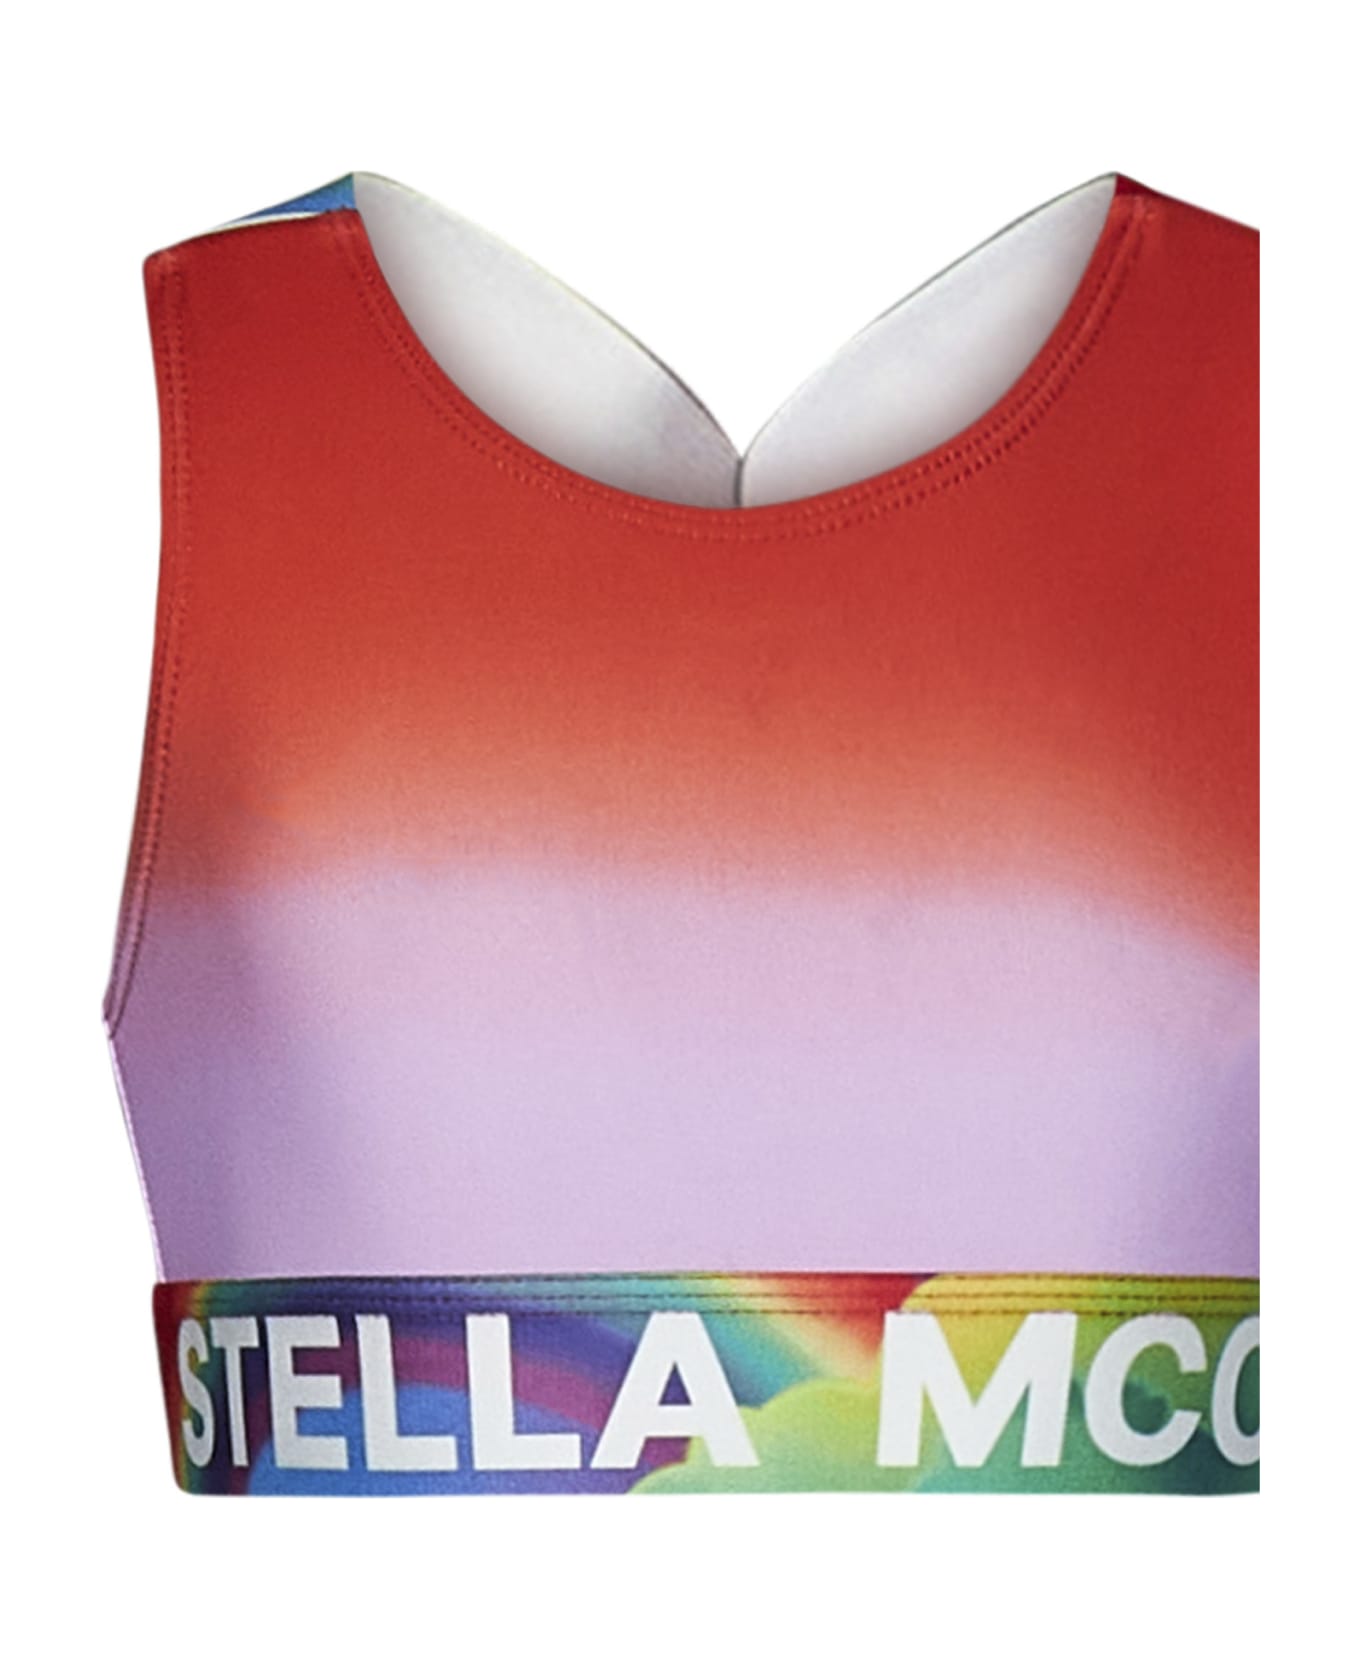 Stella McCartney Kids Bikini - Multicolore